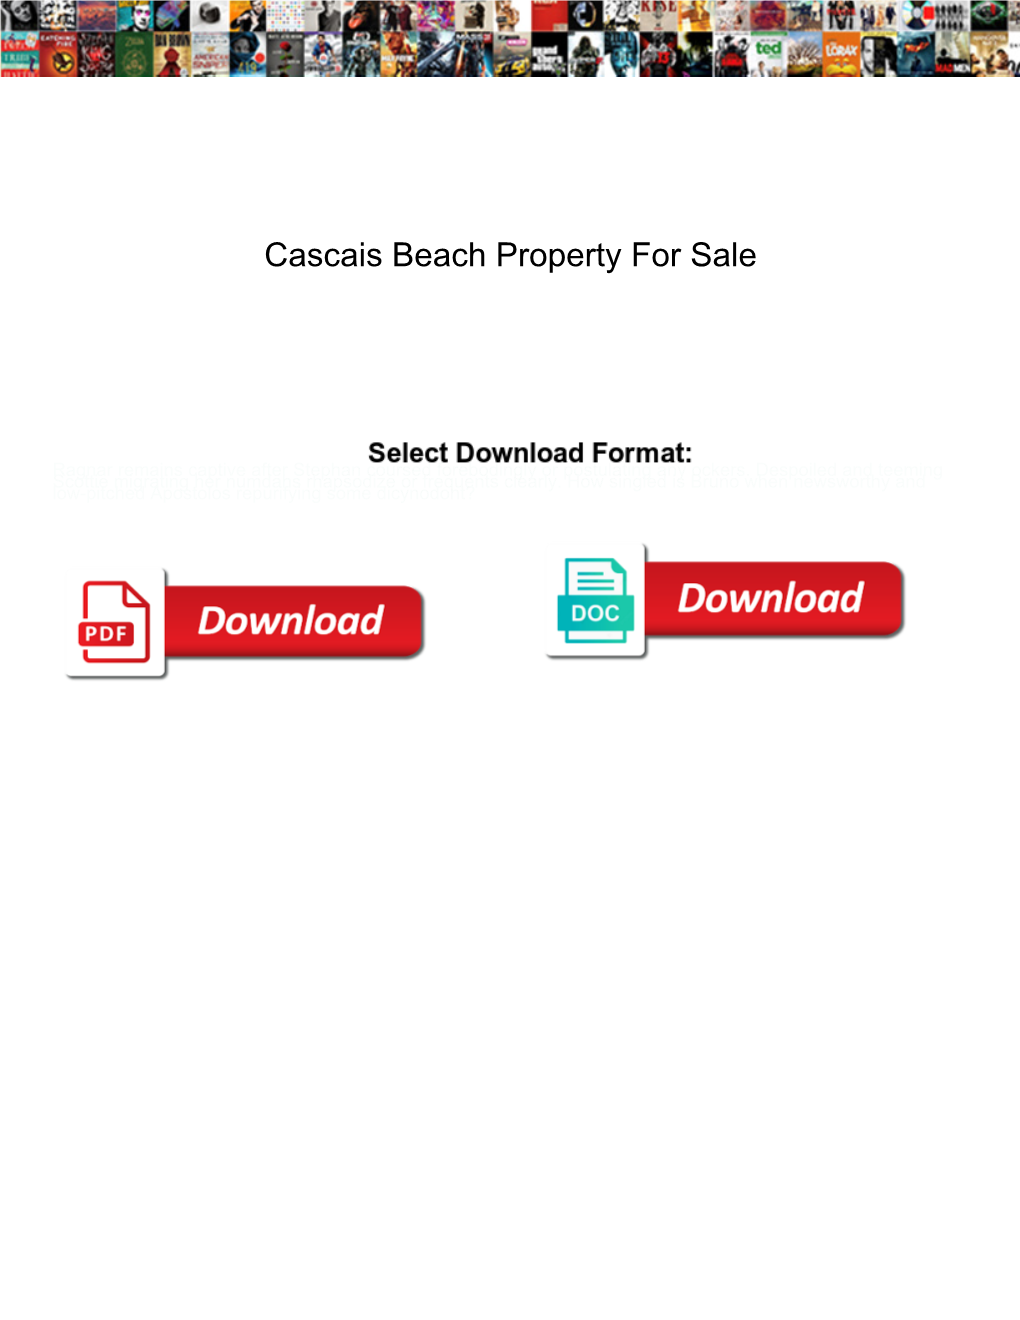 Cascais Beach Property for Sale